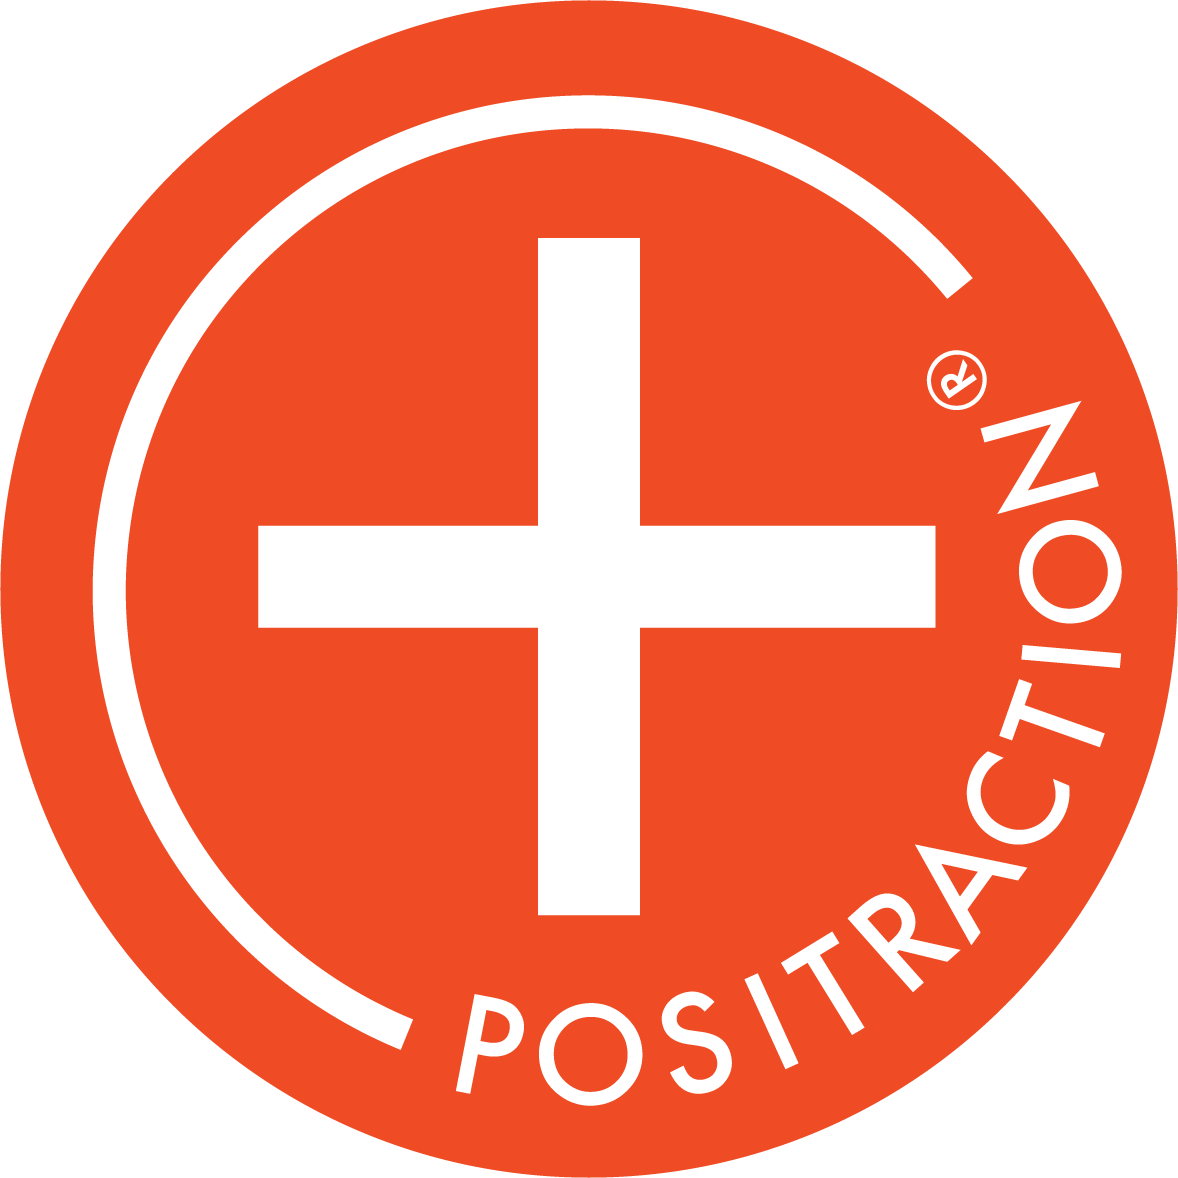 Positraction logo- marketing firm